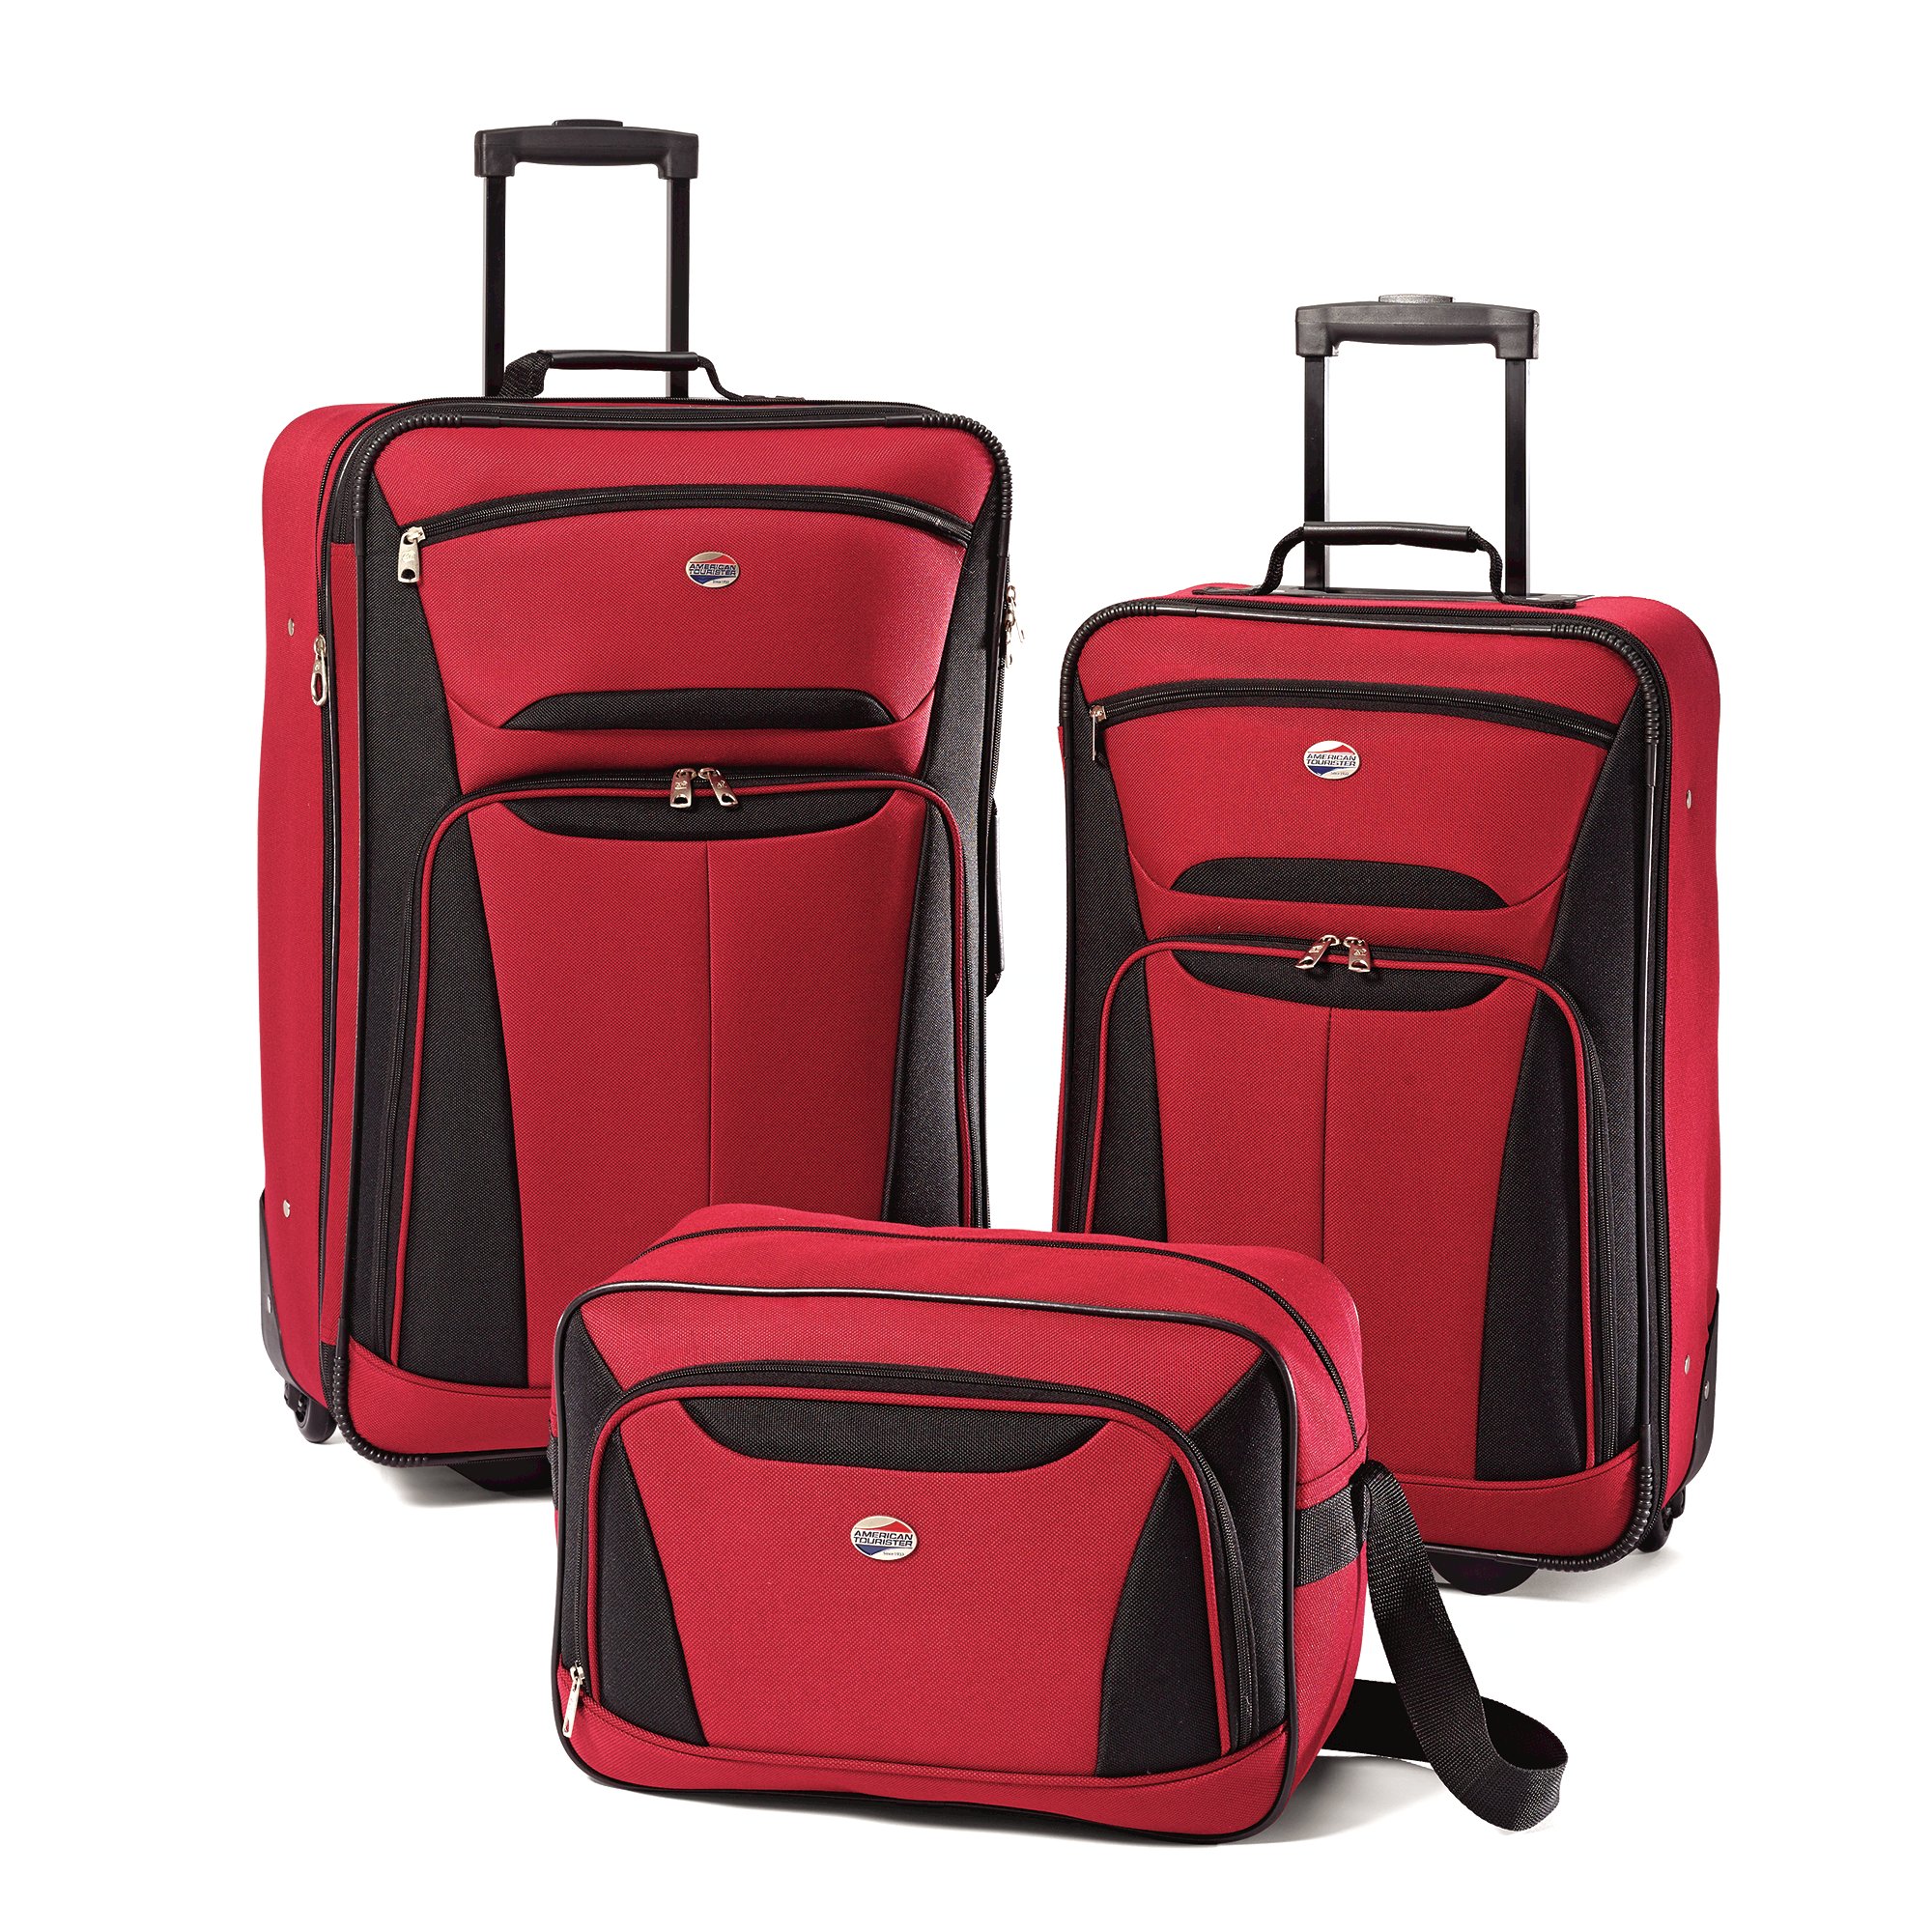 American Tourister 3pc. Fieldbrook Luggage Set - Red & Black